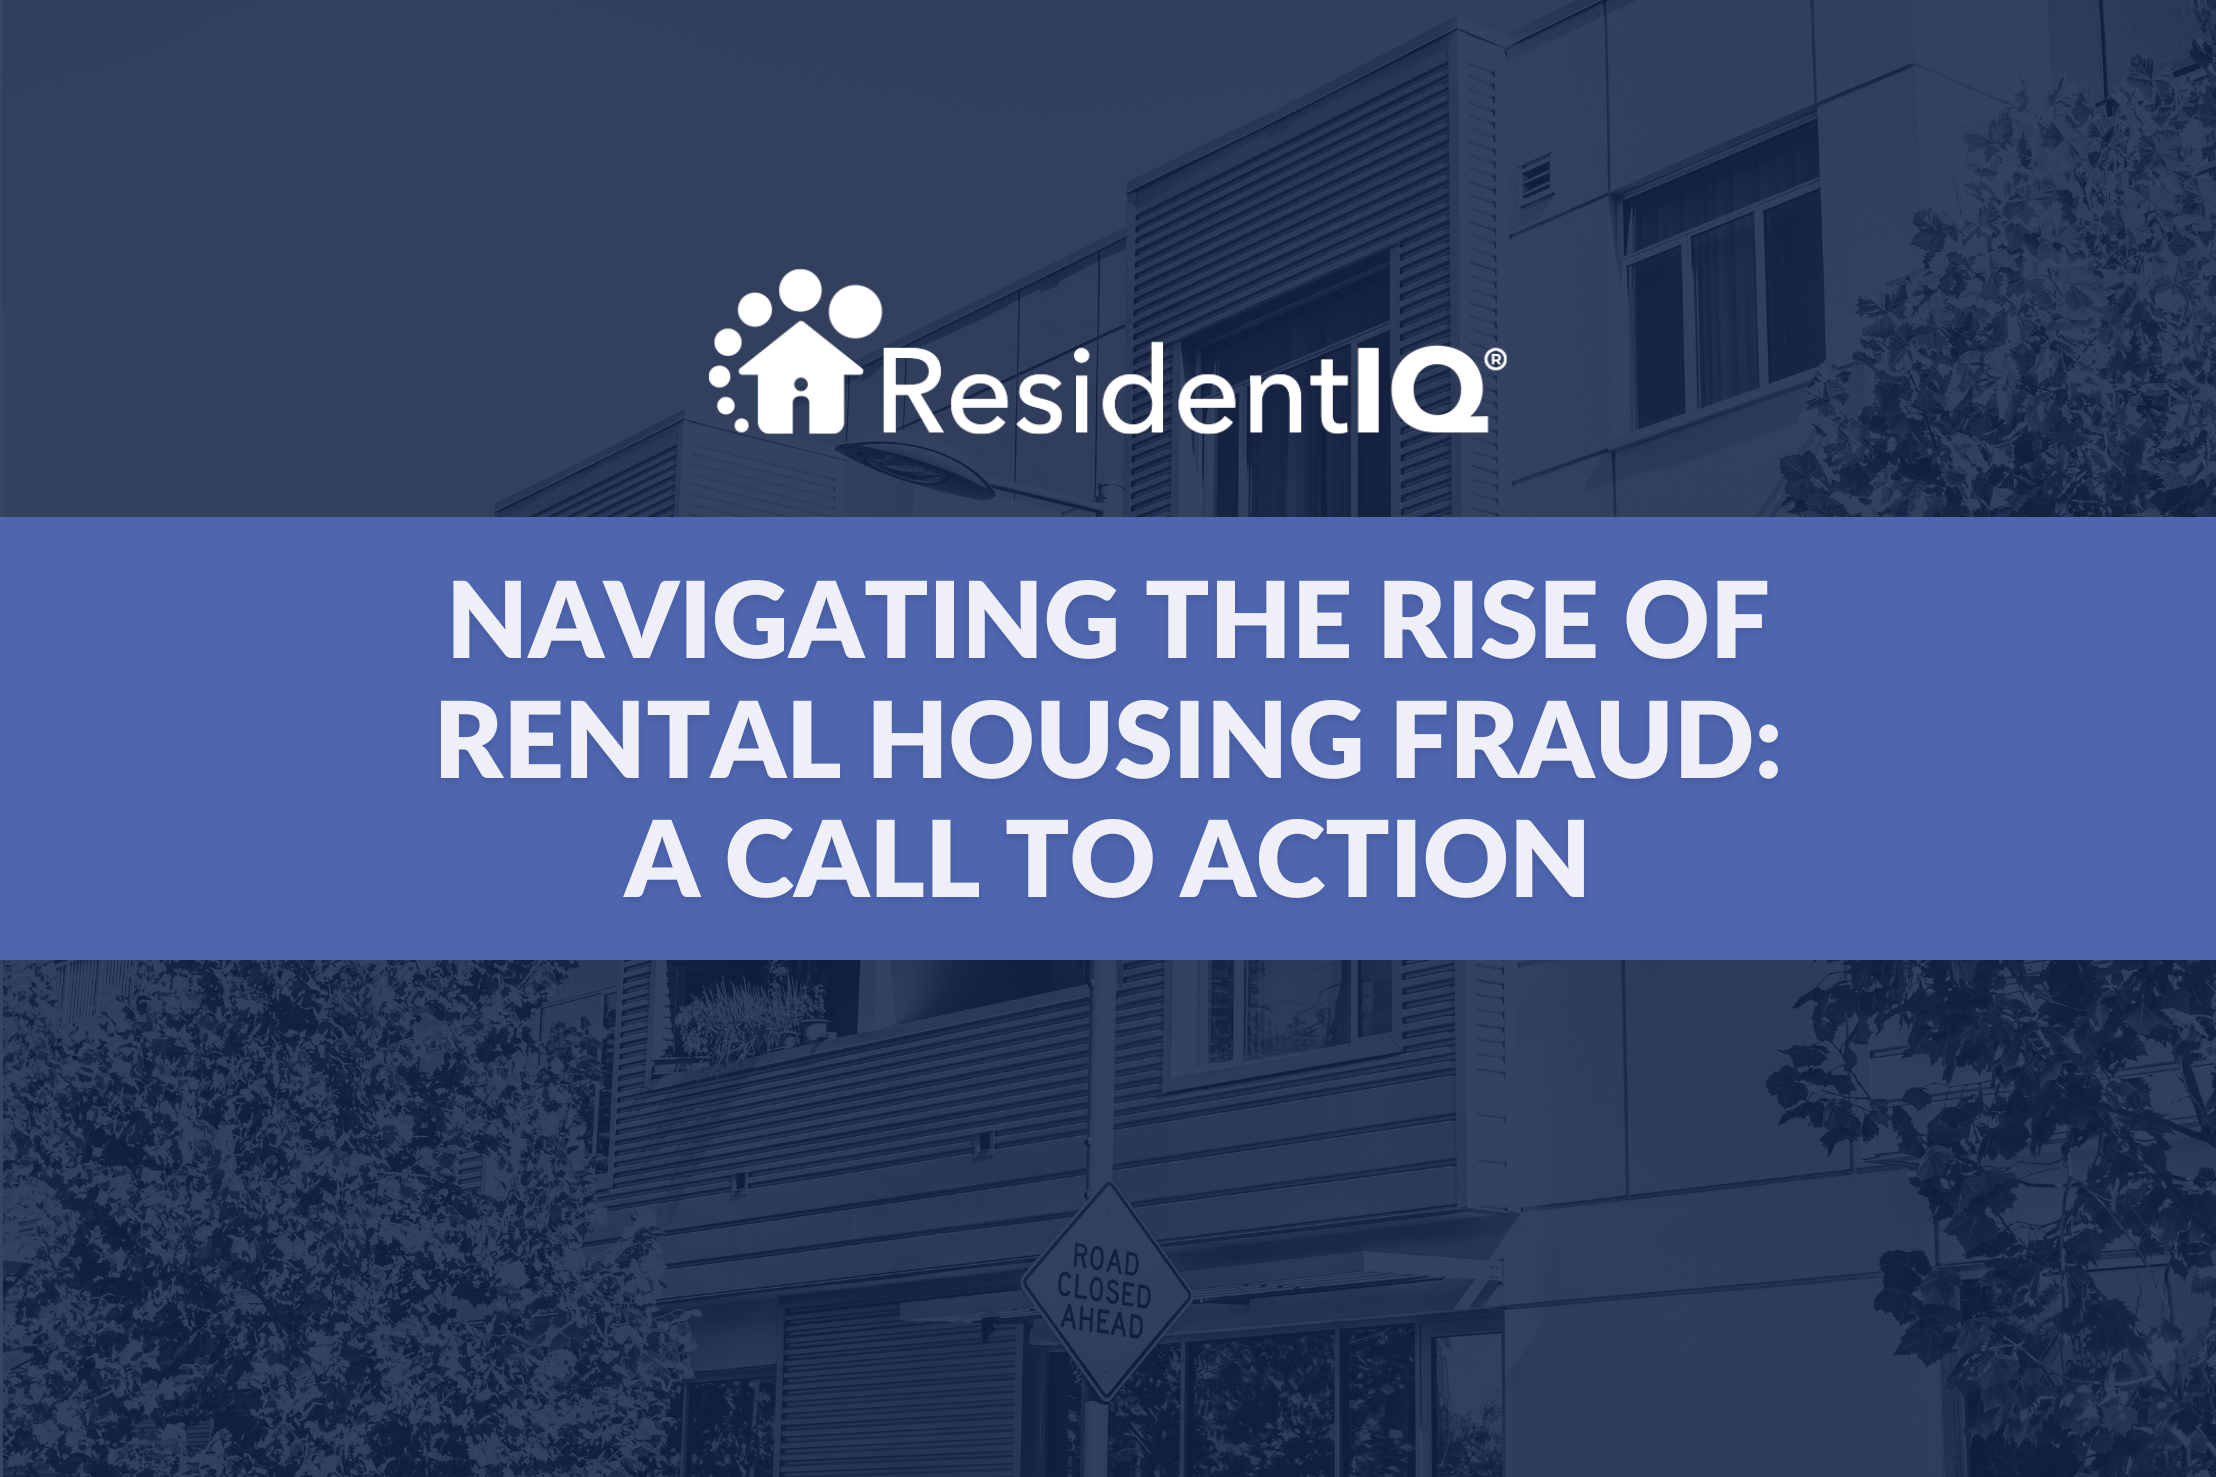 Navigating the Rise in Rental Housing Fraud Image